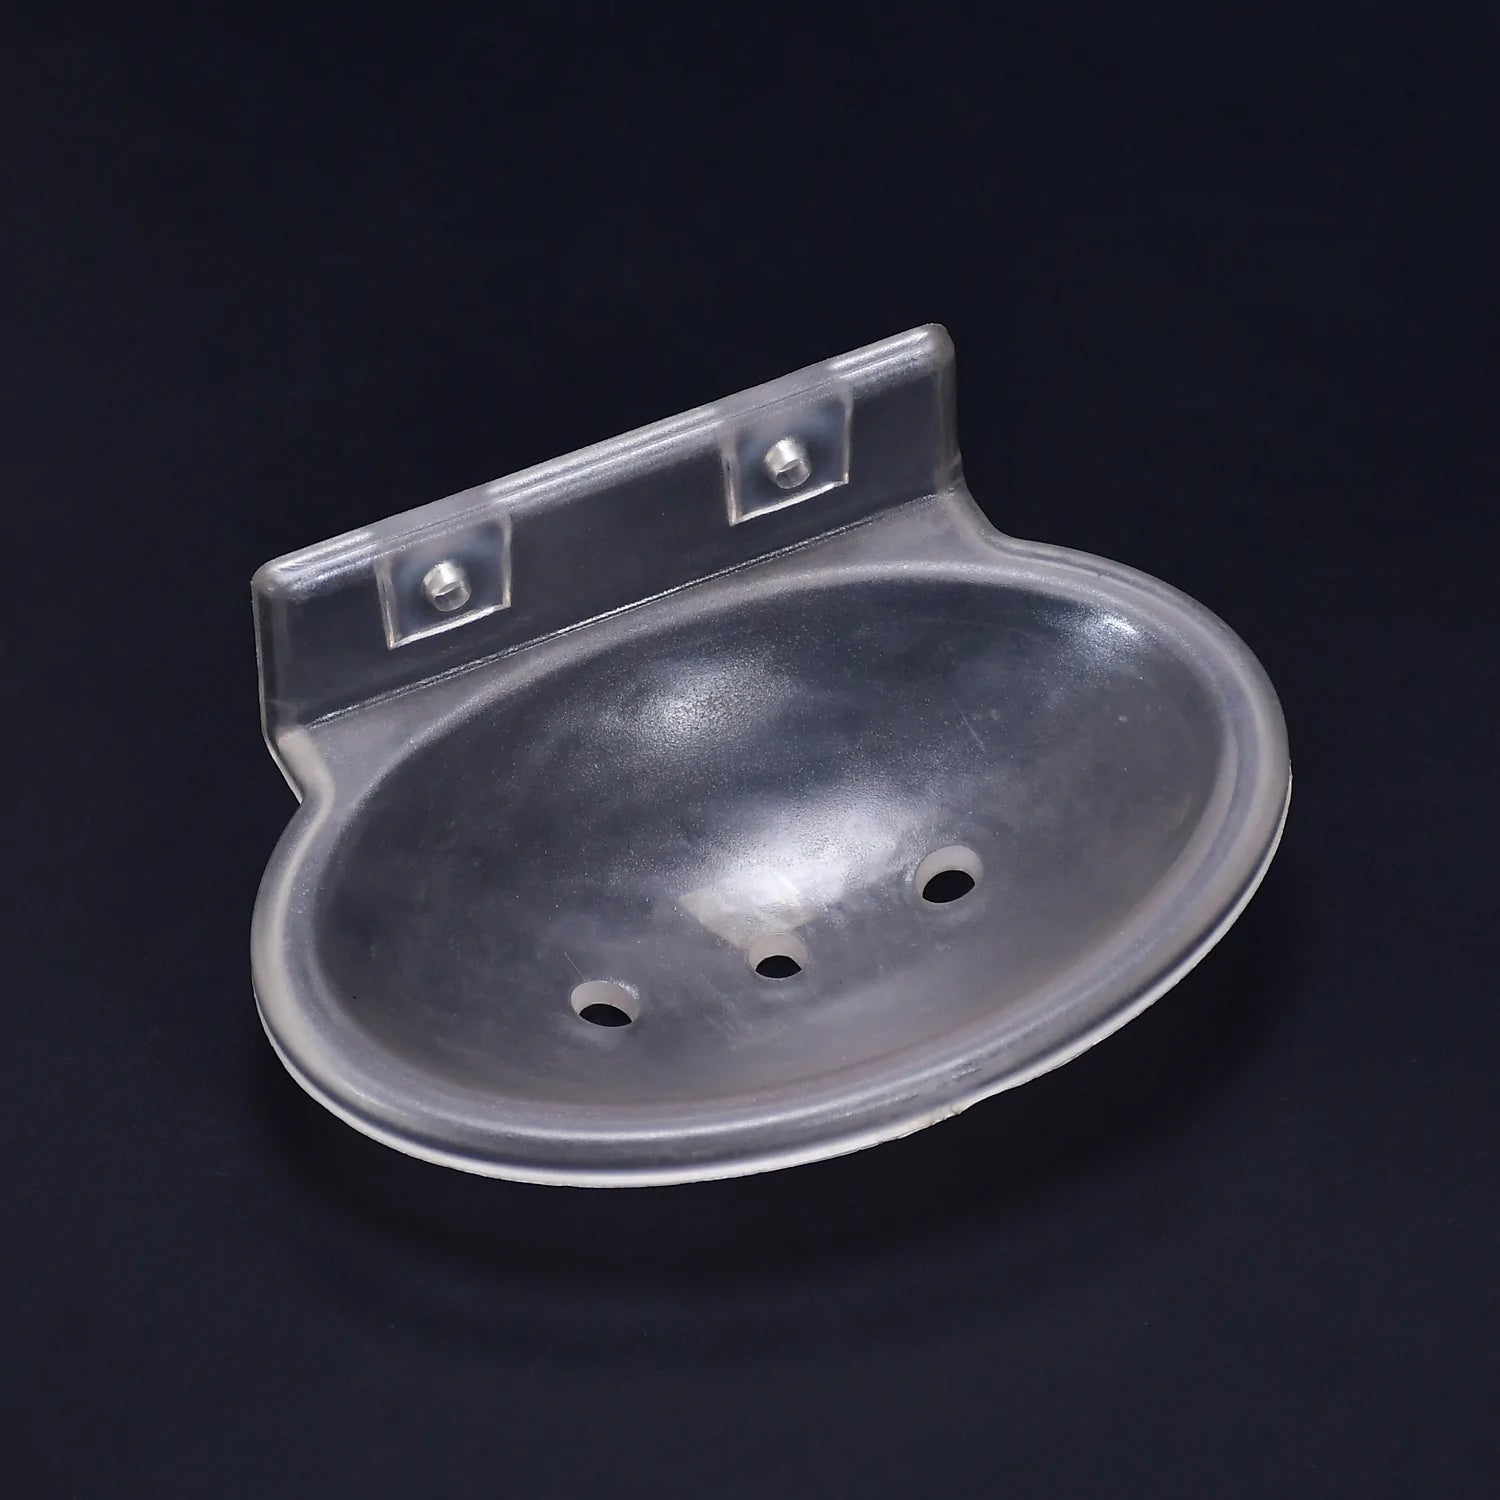 7651 Single Soap Dish Round For Bathroom Use DeoDap